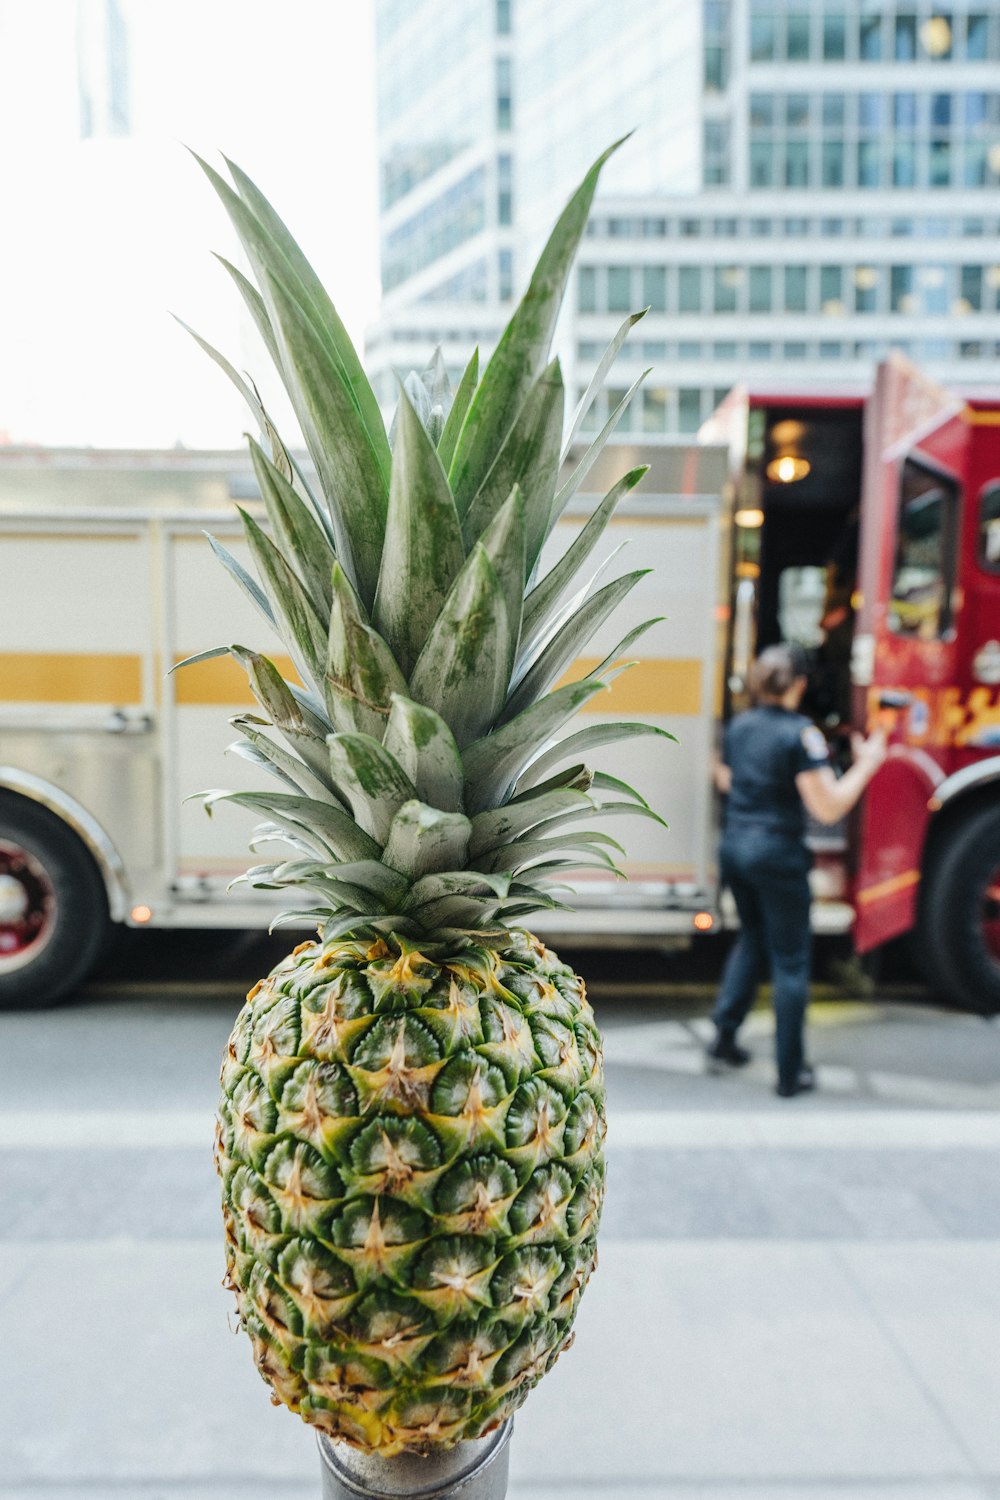 shallow focus photo of pineapple